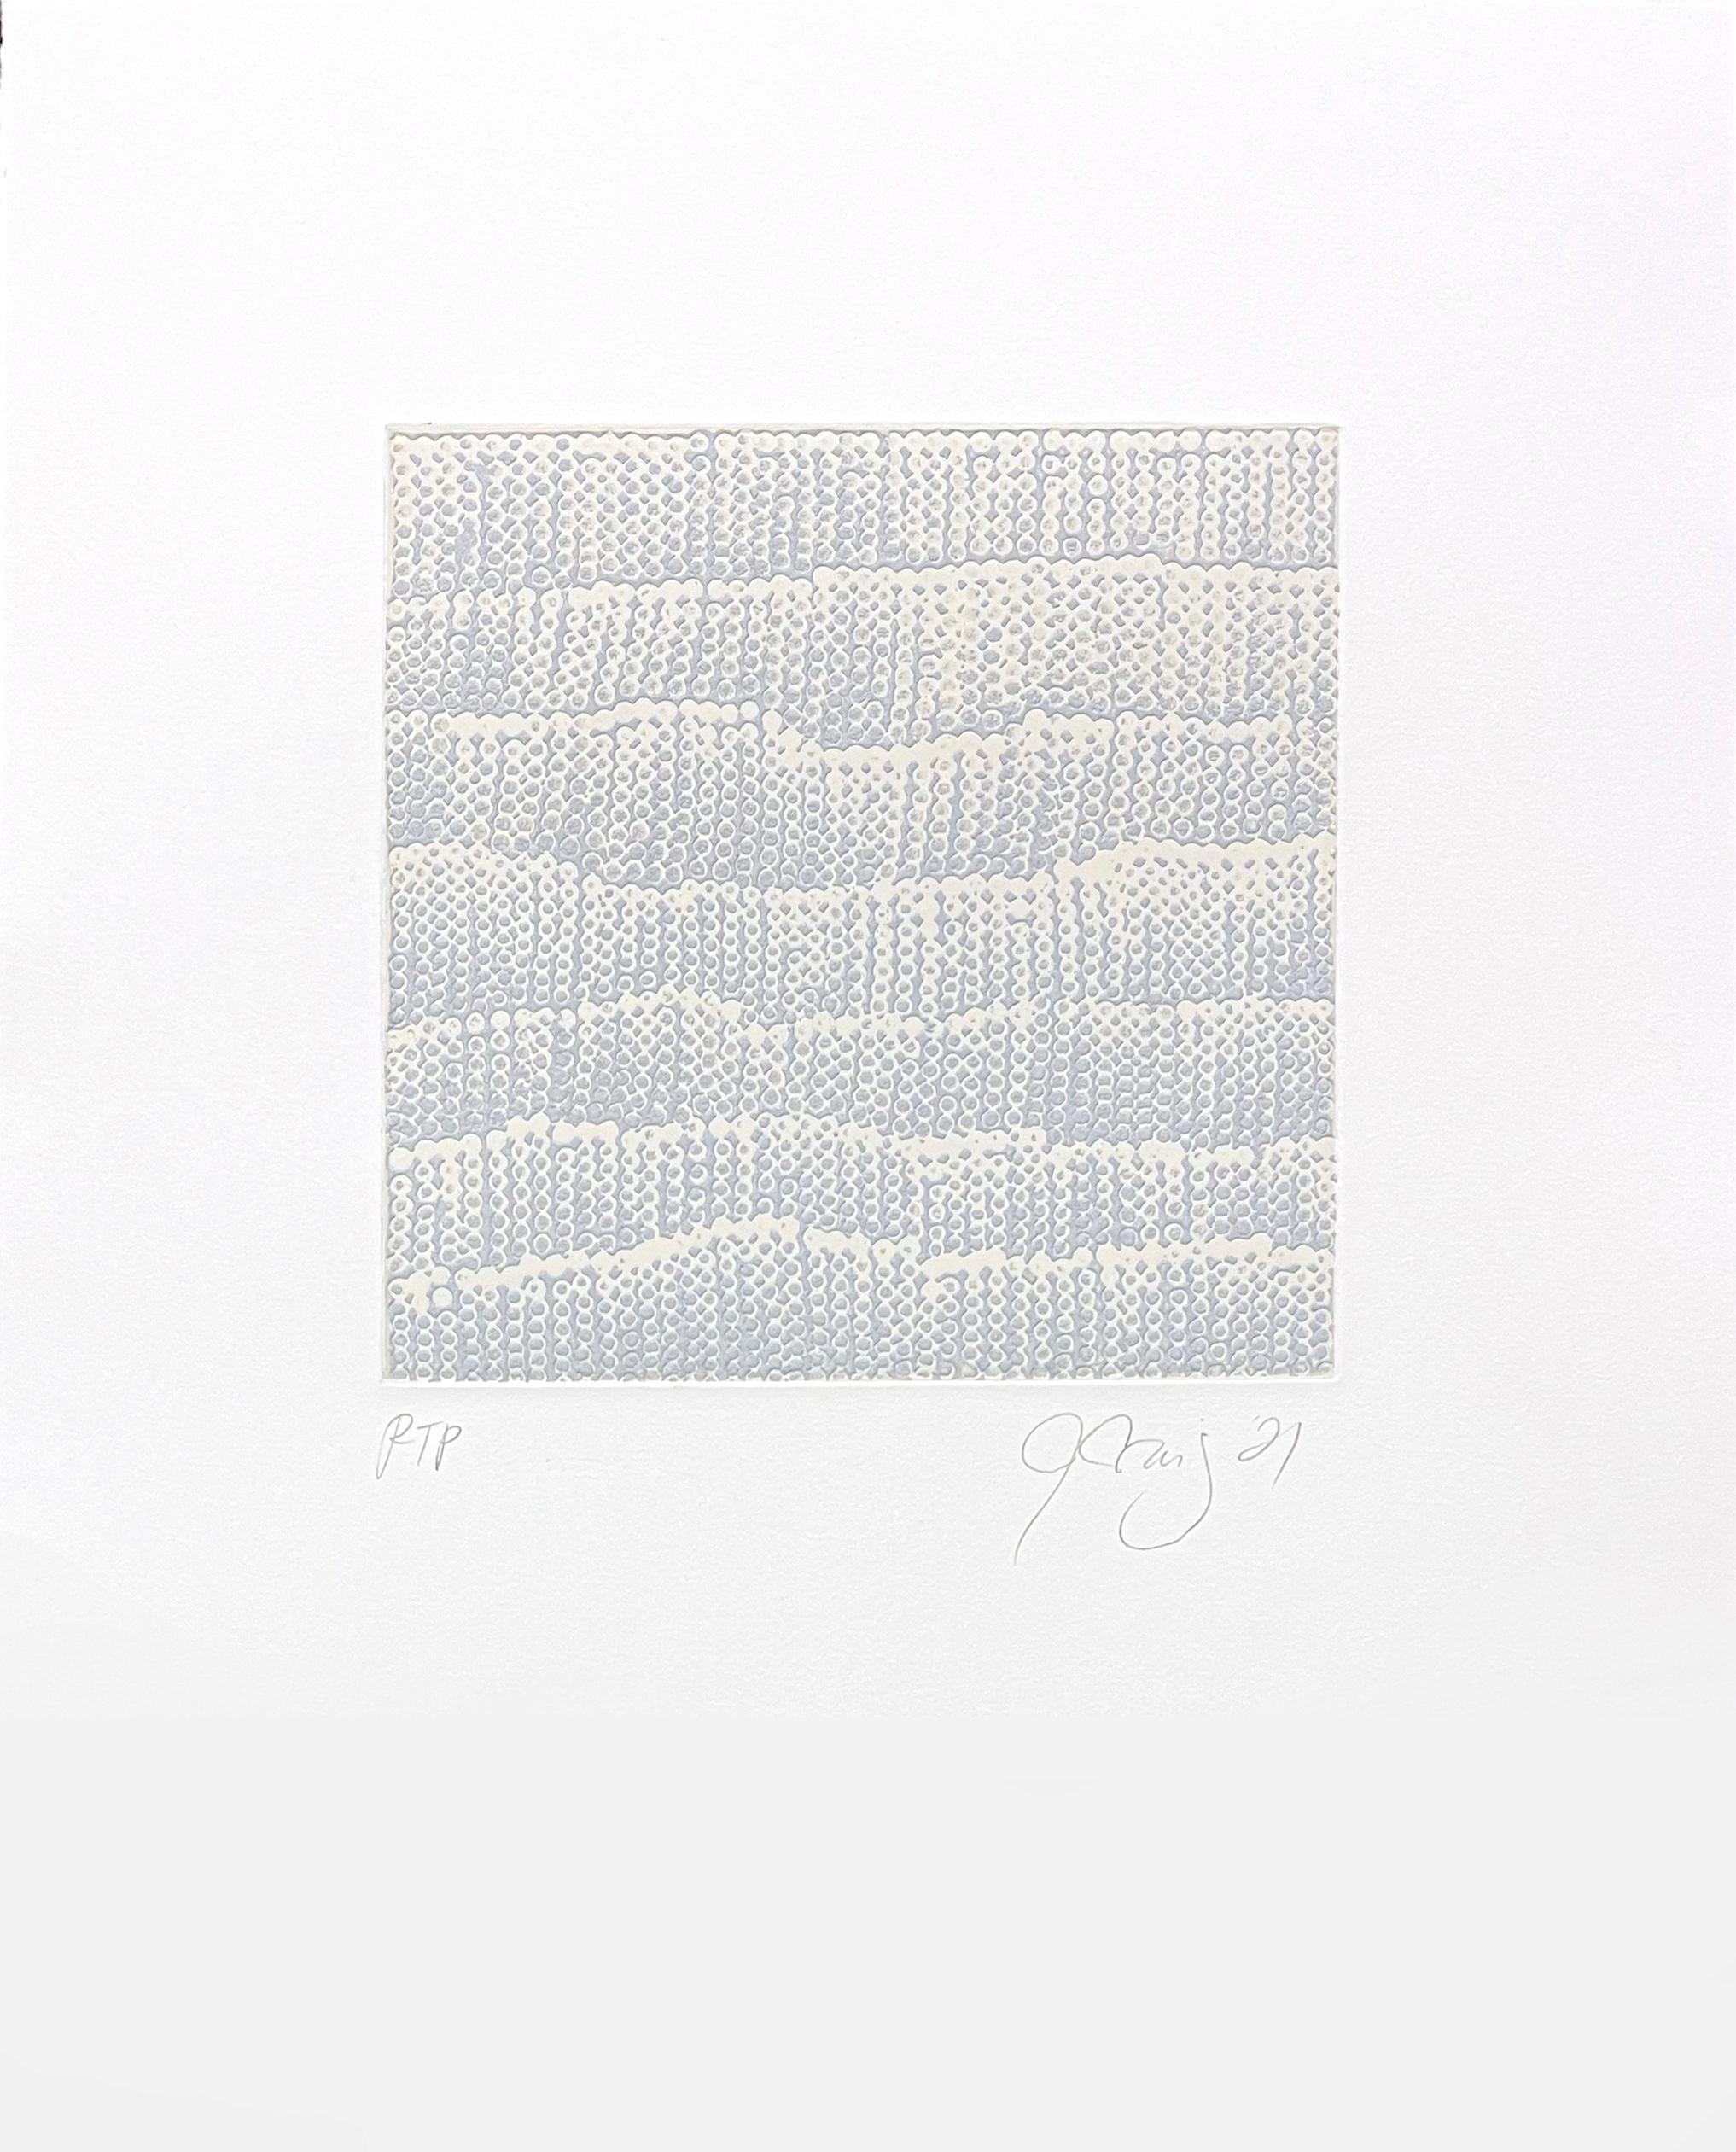 Jordan Ann Craig Abstract Print - Dot Drawing; Blue Grey No 1